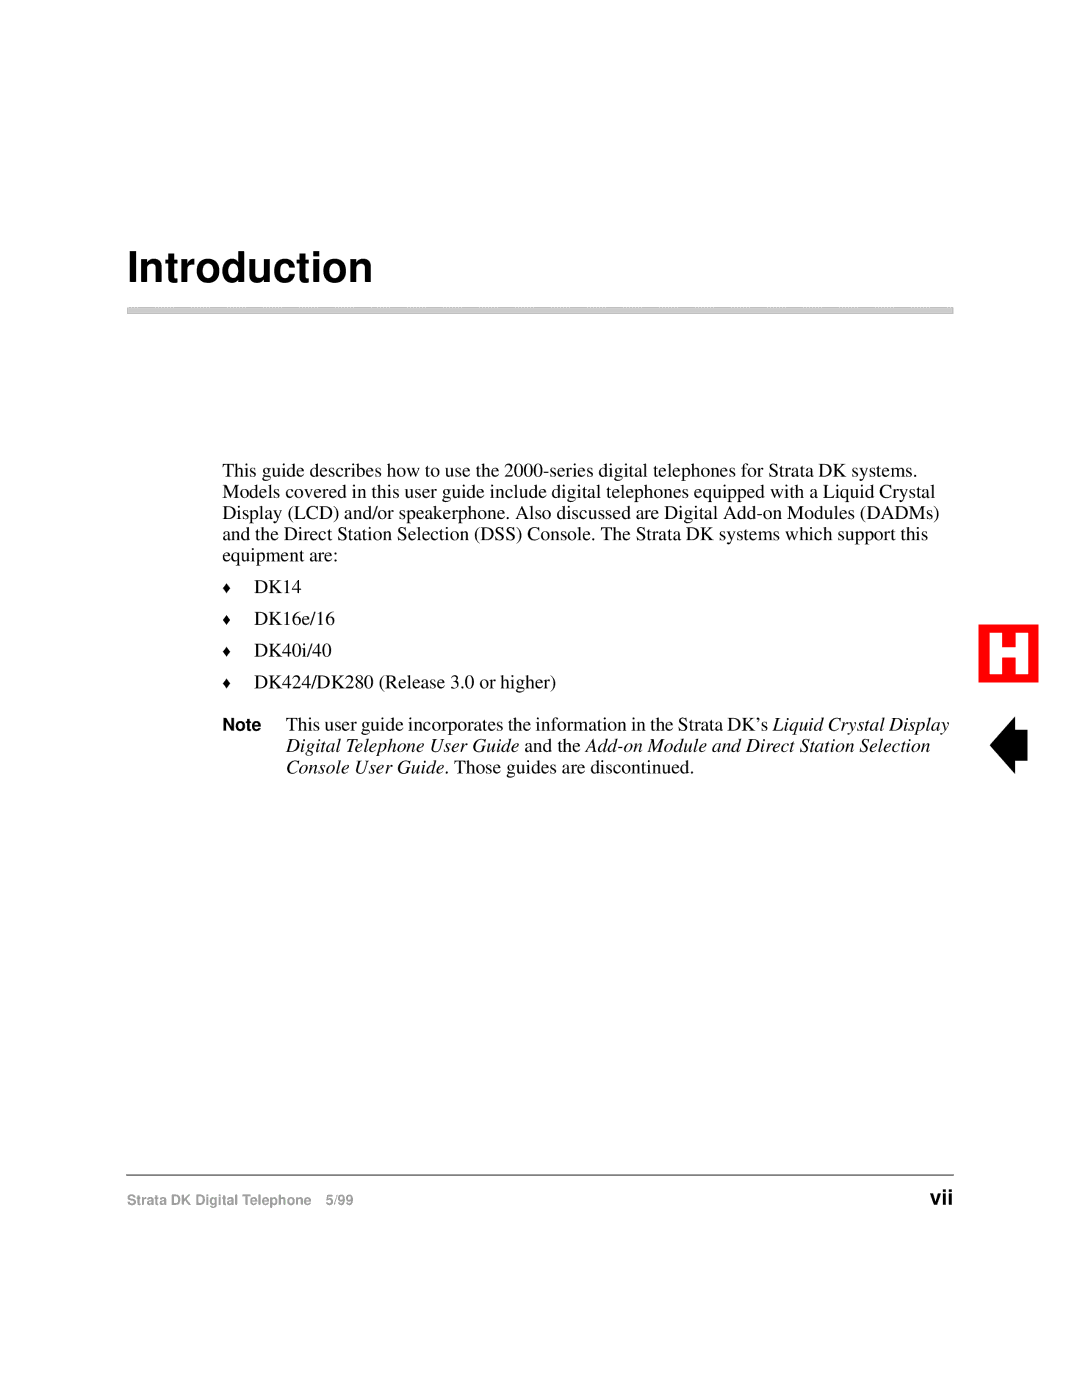 Toshiba Digital Telephone manual Introduction, Vii 